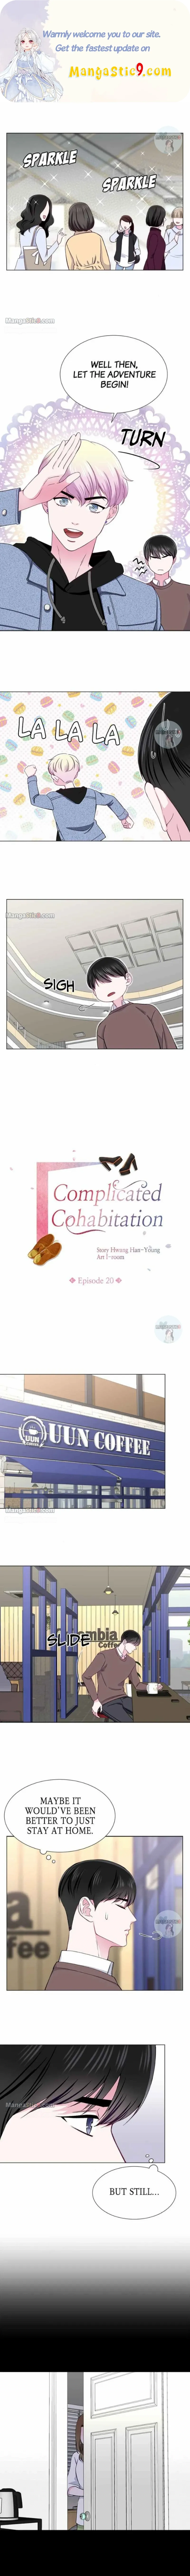 Complicated Cohabitation - Page 2